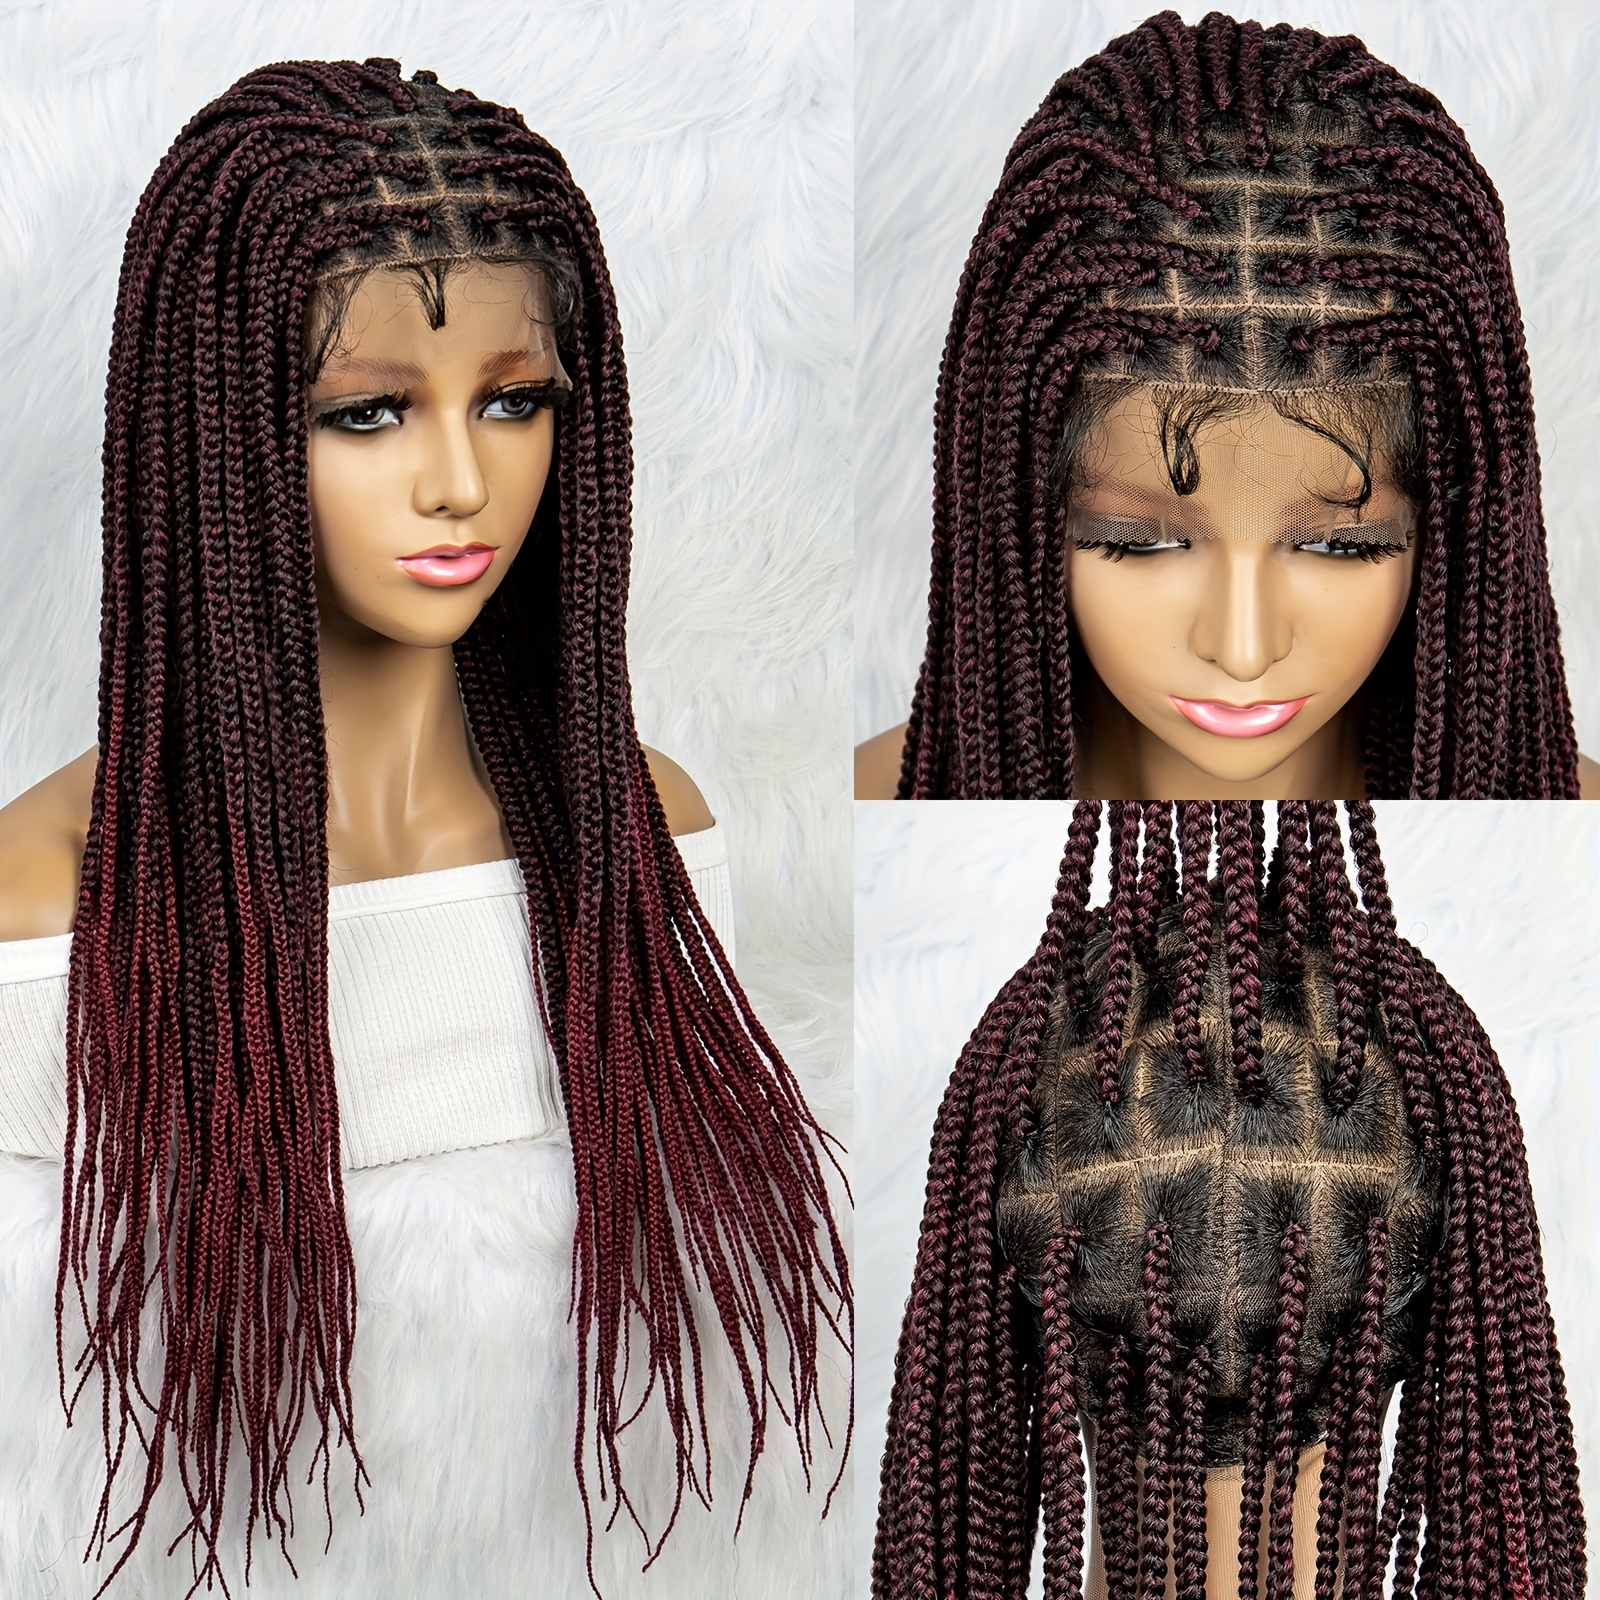 Braided Wig: lace frontal boxbraids wig.Handmade braided wig.